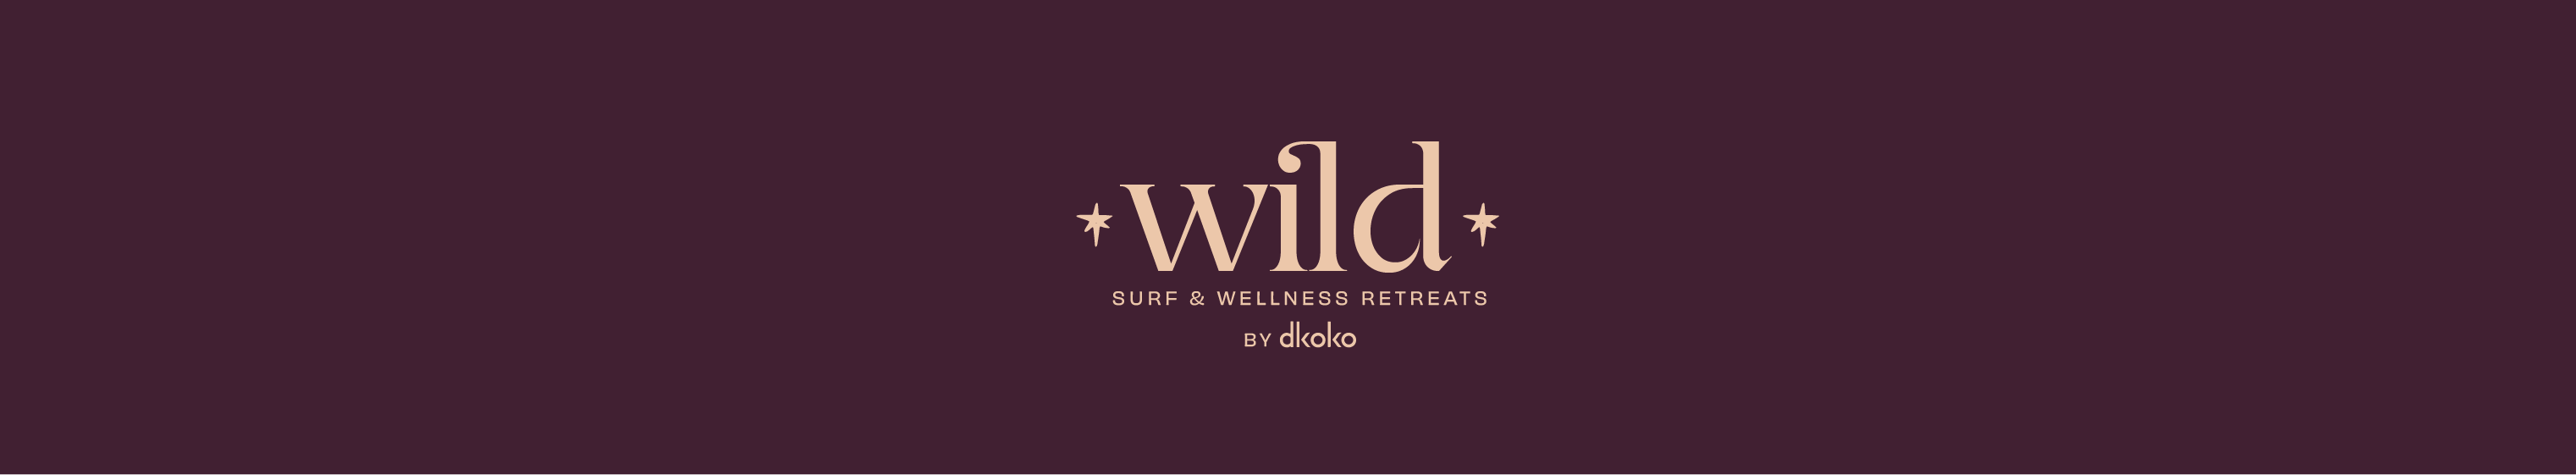 Wild By Dkoko Surf & Wellness Costa Rica Retreats logo